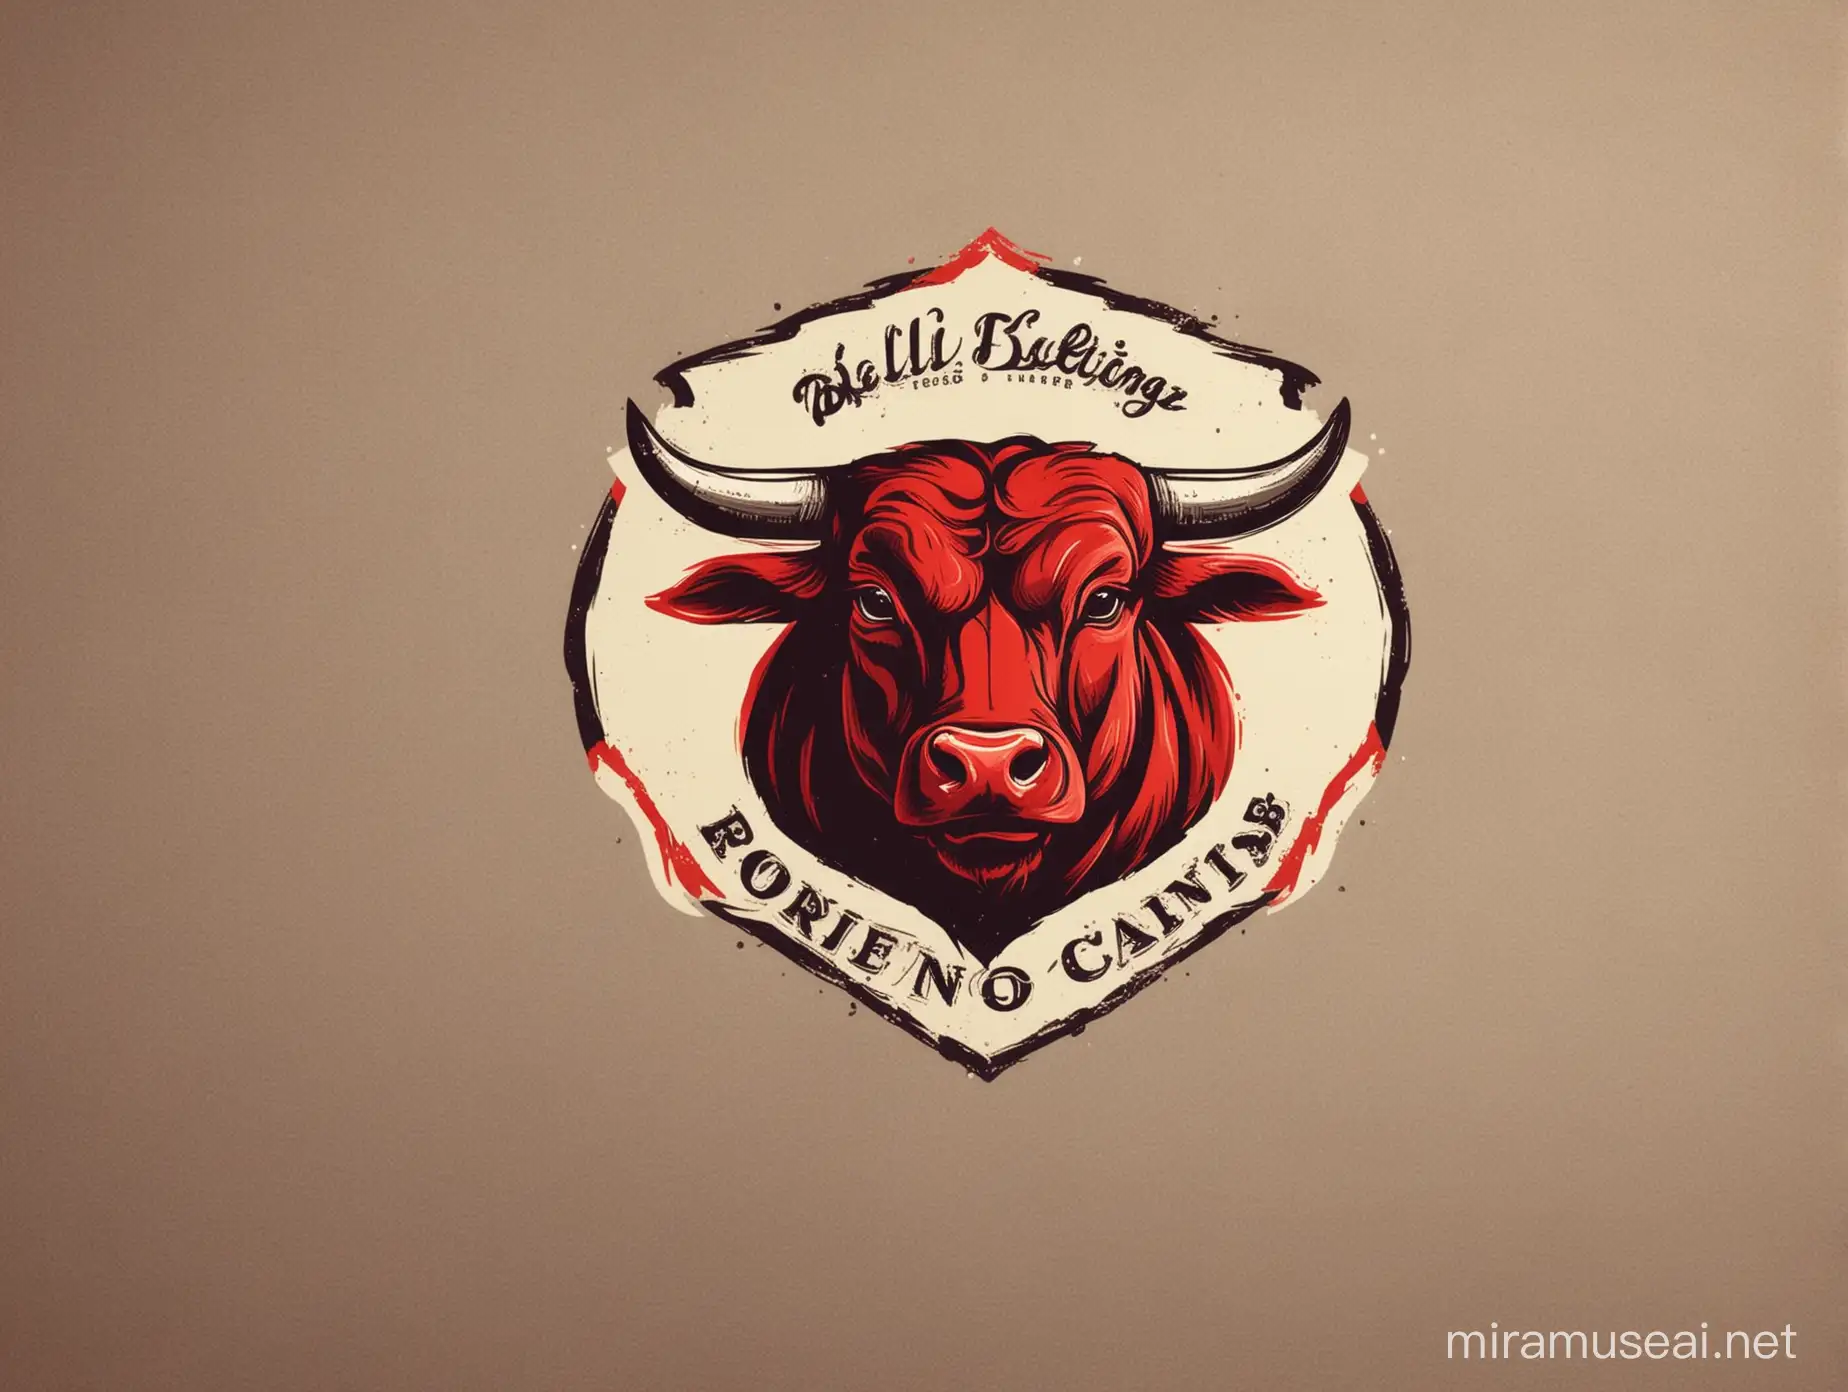 Bullfighting club company logo designs